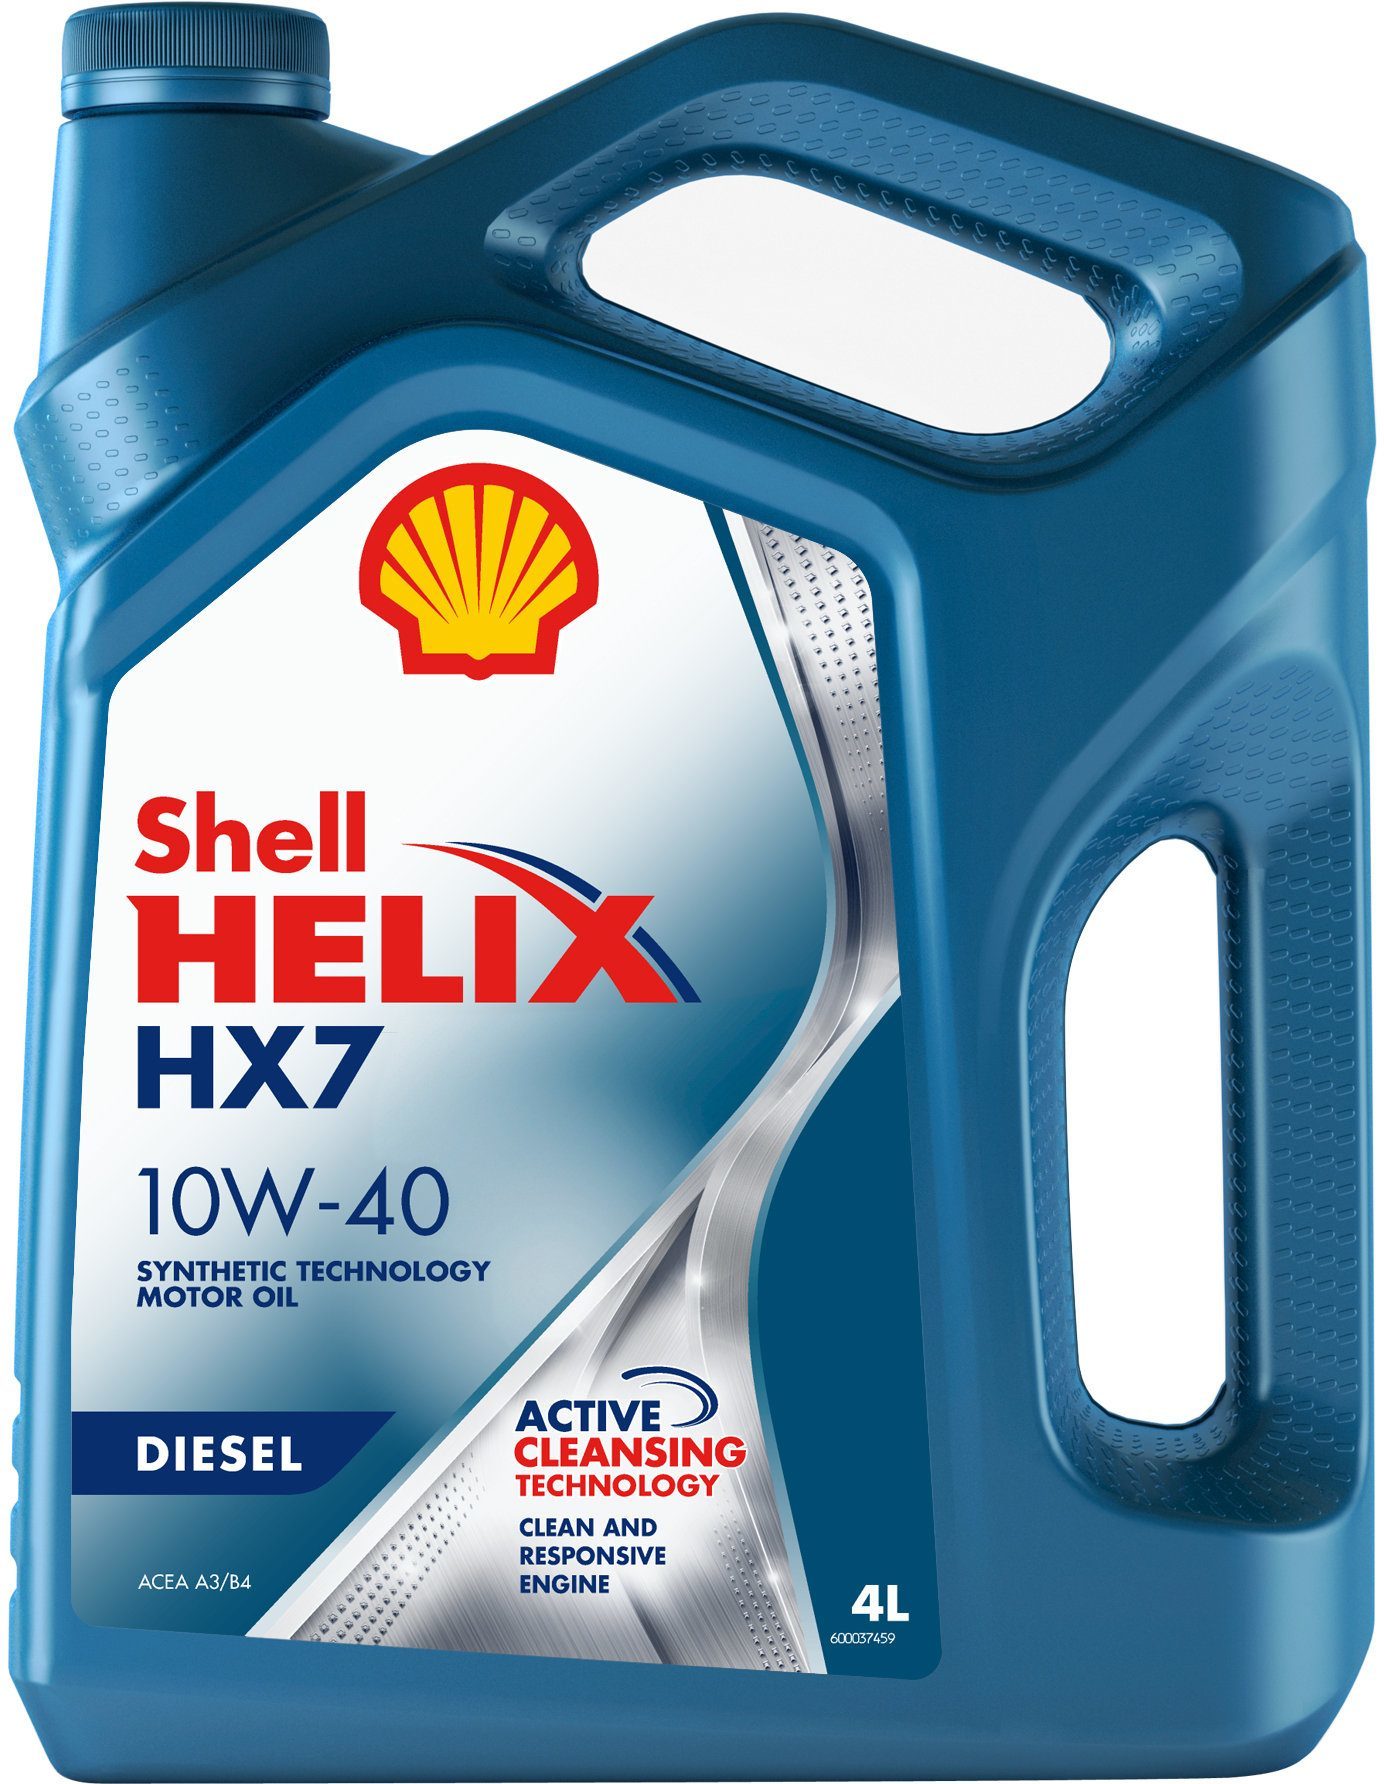 Shell Helix Diesel HX7 10W40 Полусинтетическое дизельное моторное масло